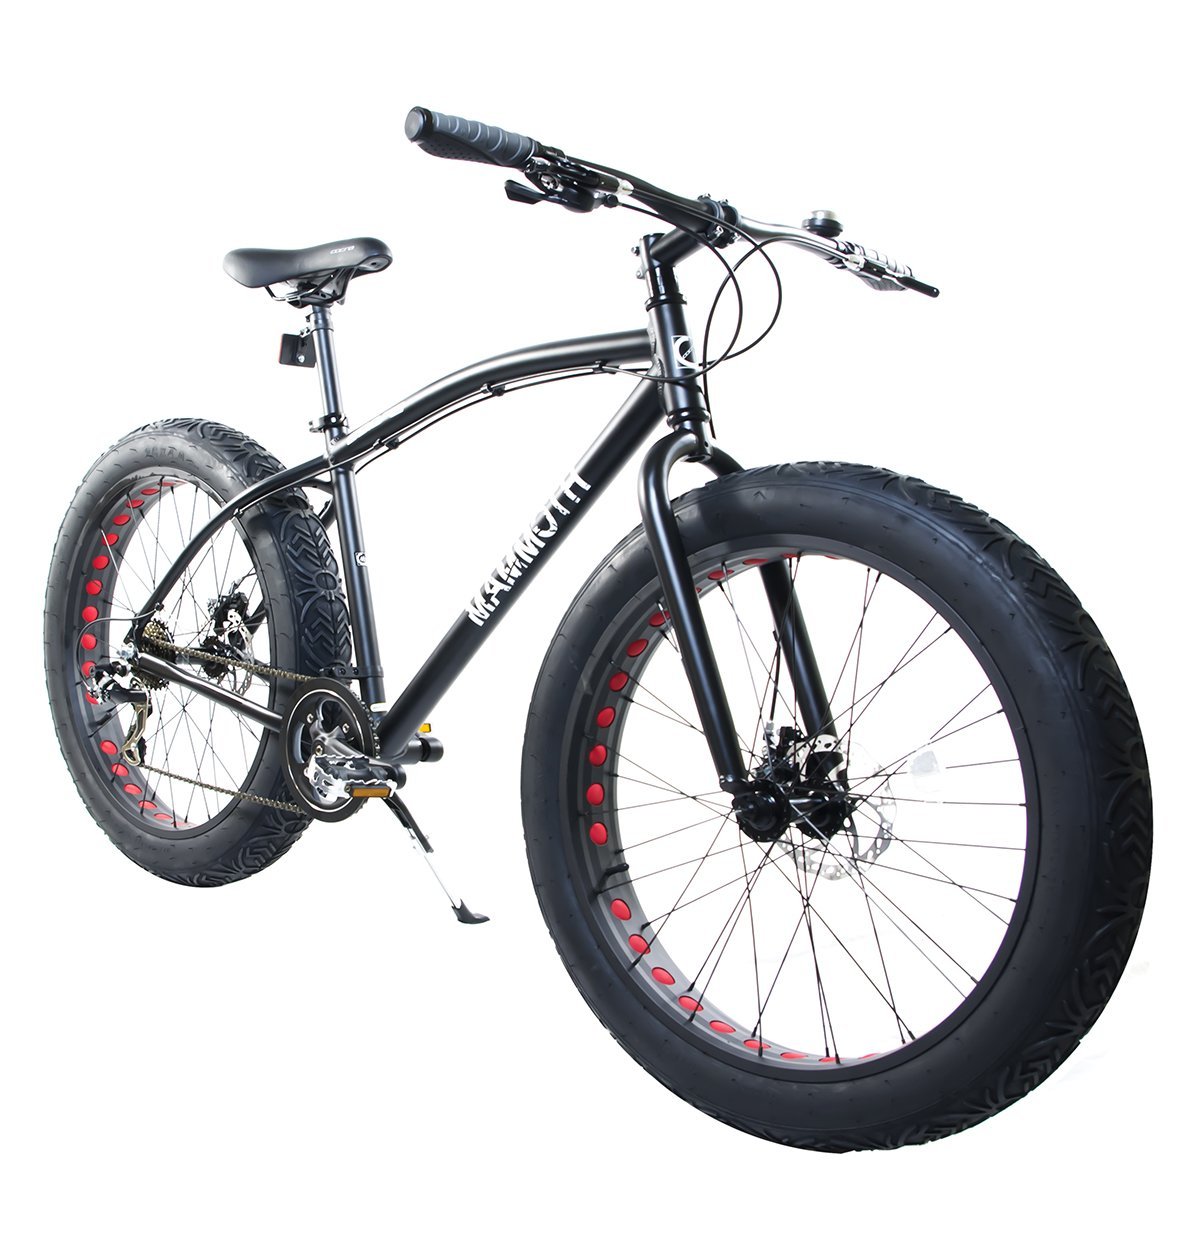 Alton mammoth fat tire bike